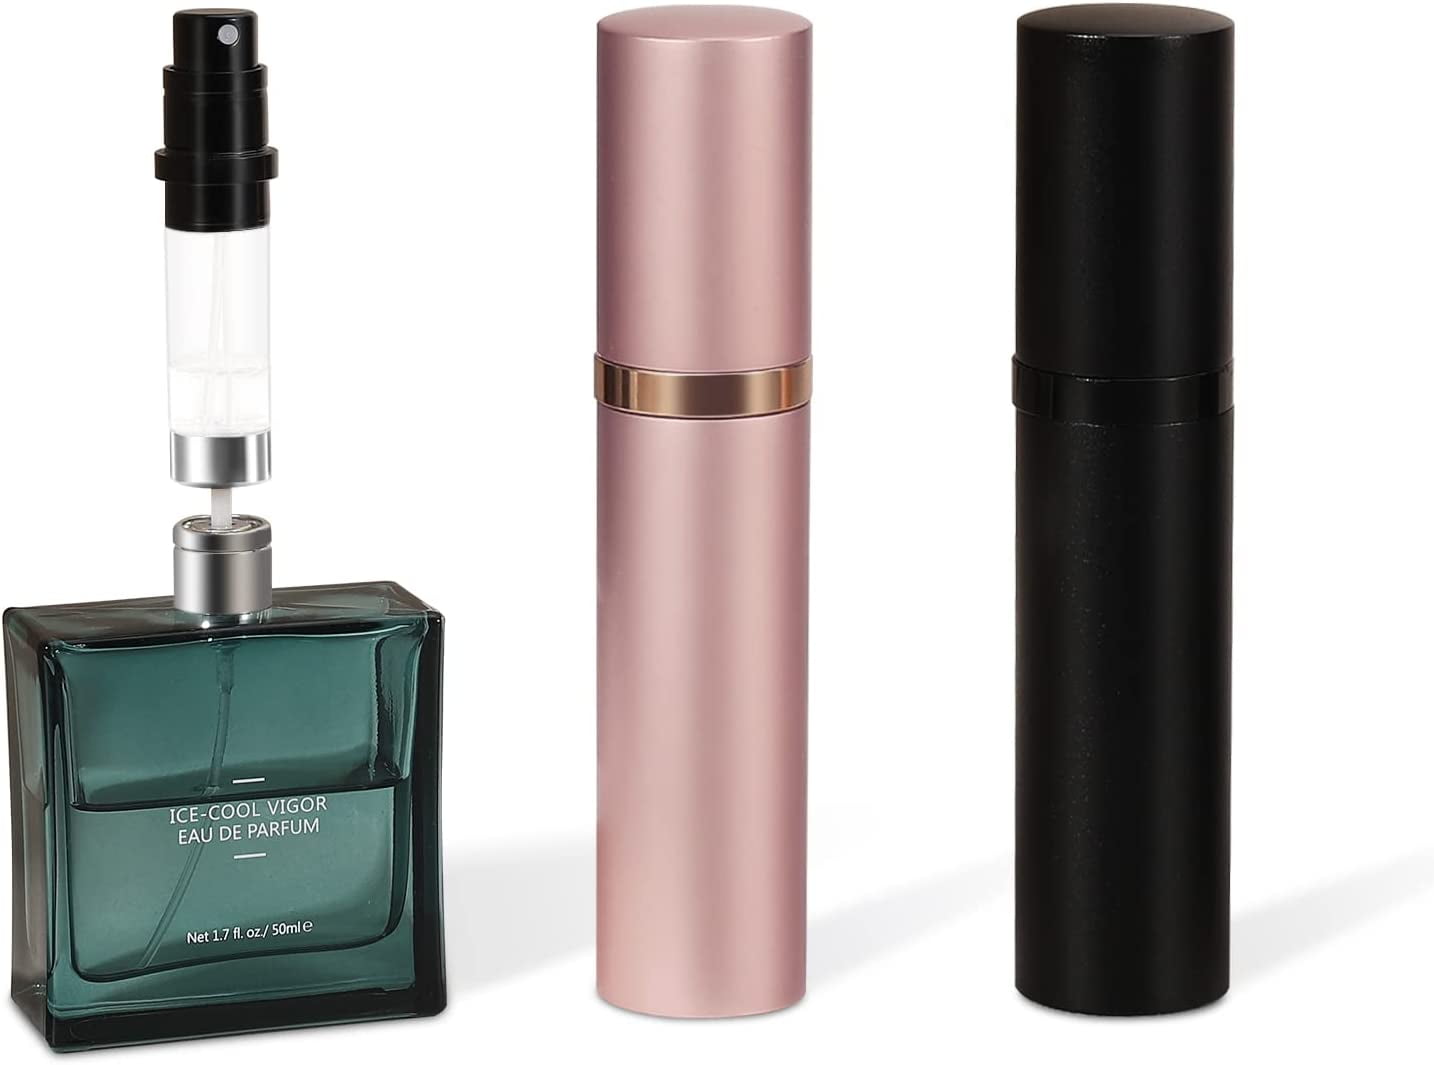 Perfume Atomiser Bottles, SONGQEE 3 PCS 5ml Refillable Spray Bottle Mini  Underfill Empty Travel Bottle for Purse Handbag Pocket Luggage : Amazon.in:  Beauty